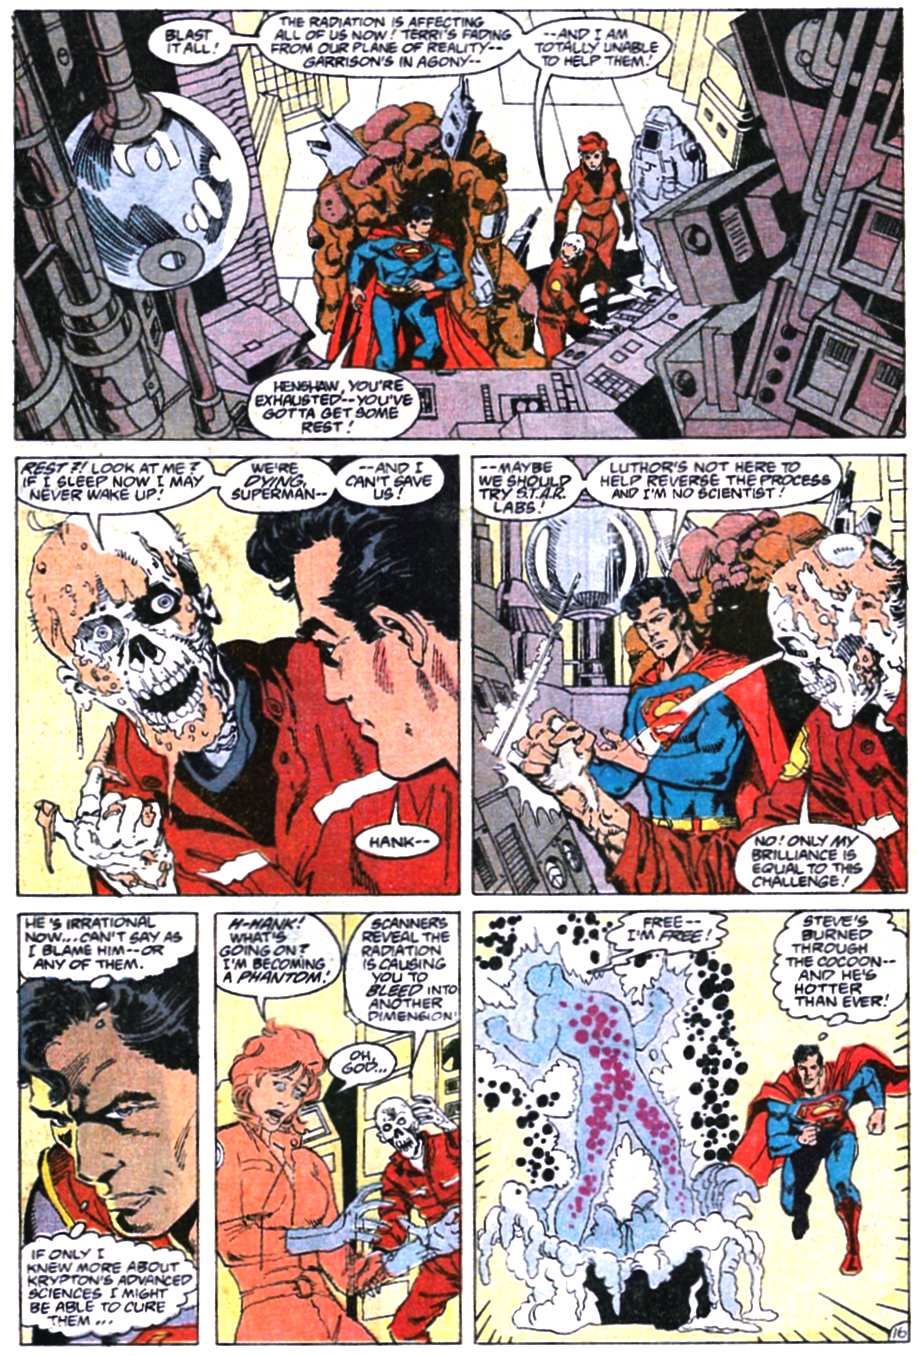 Cyborg Superman's origin has roots in a DC Comics Fantastic Four-style tale